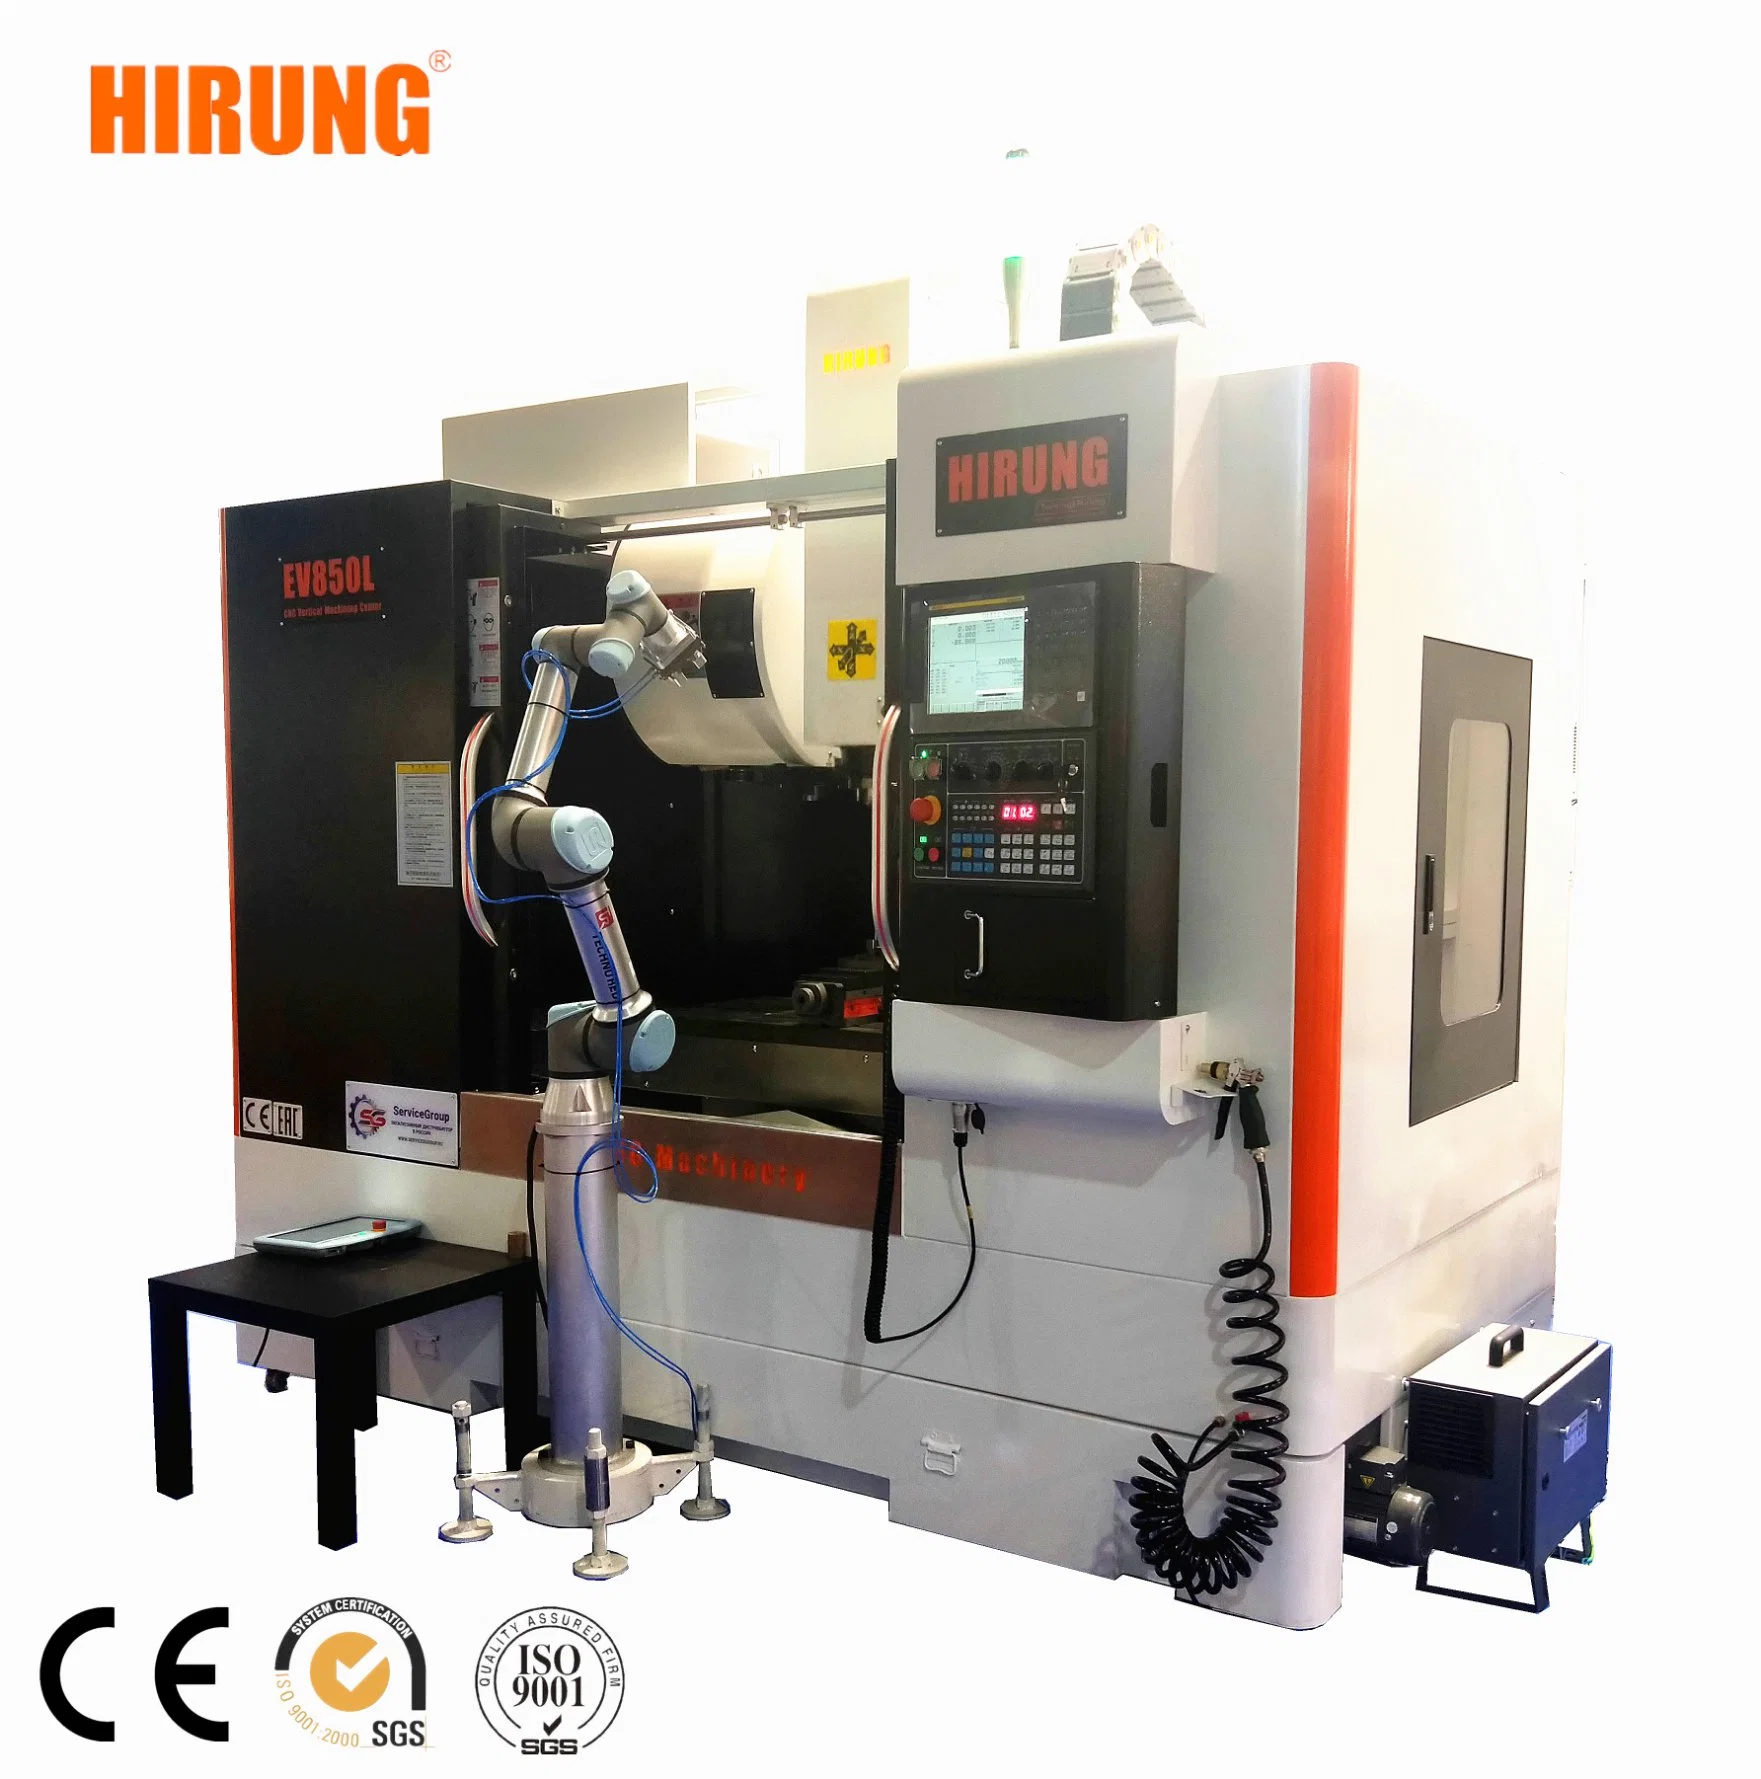 China heißer Verkauf CNC Vertikale Fräsmaschine, CNC Bearbeitungszentrum (EV850L)